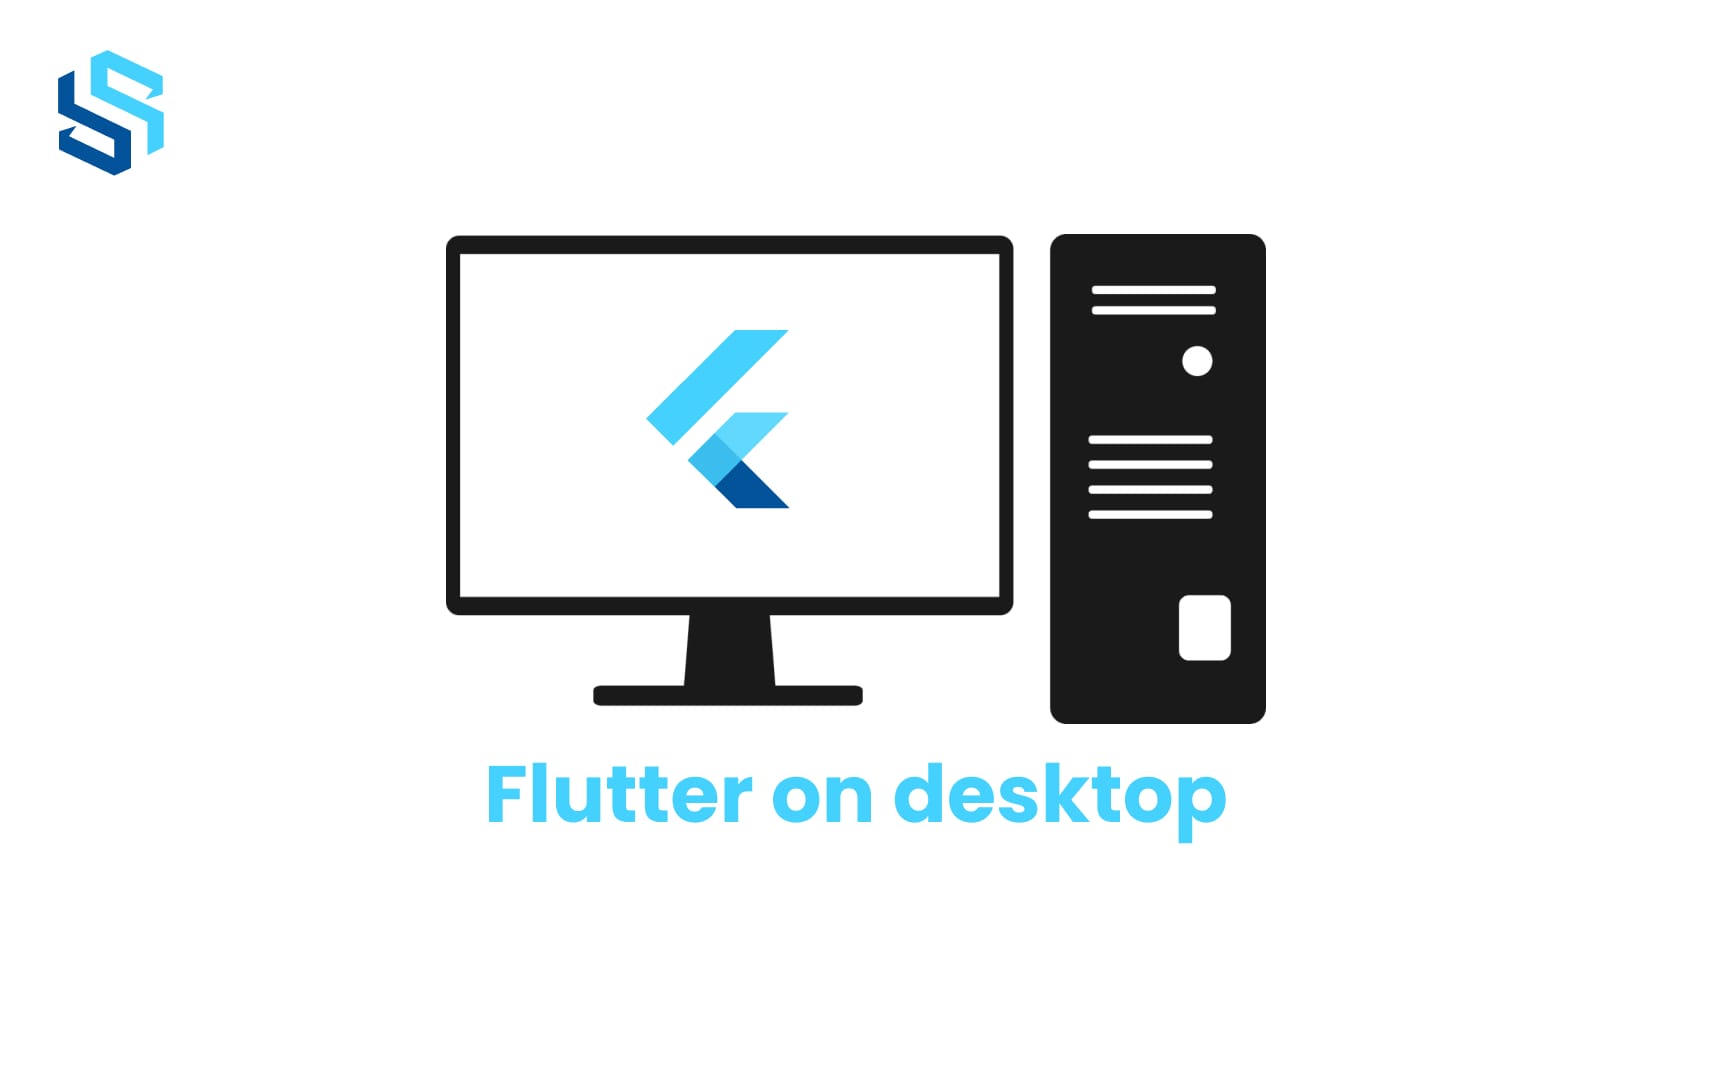 Fultter on Desktop